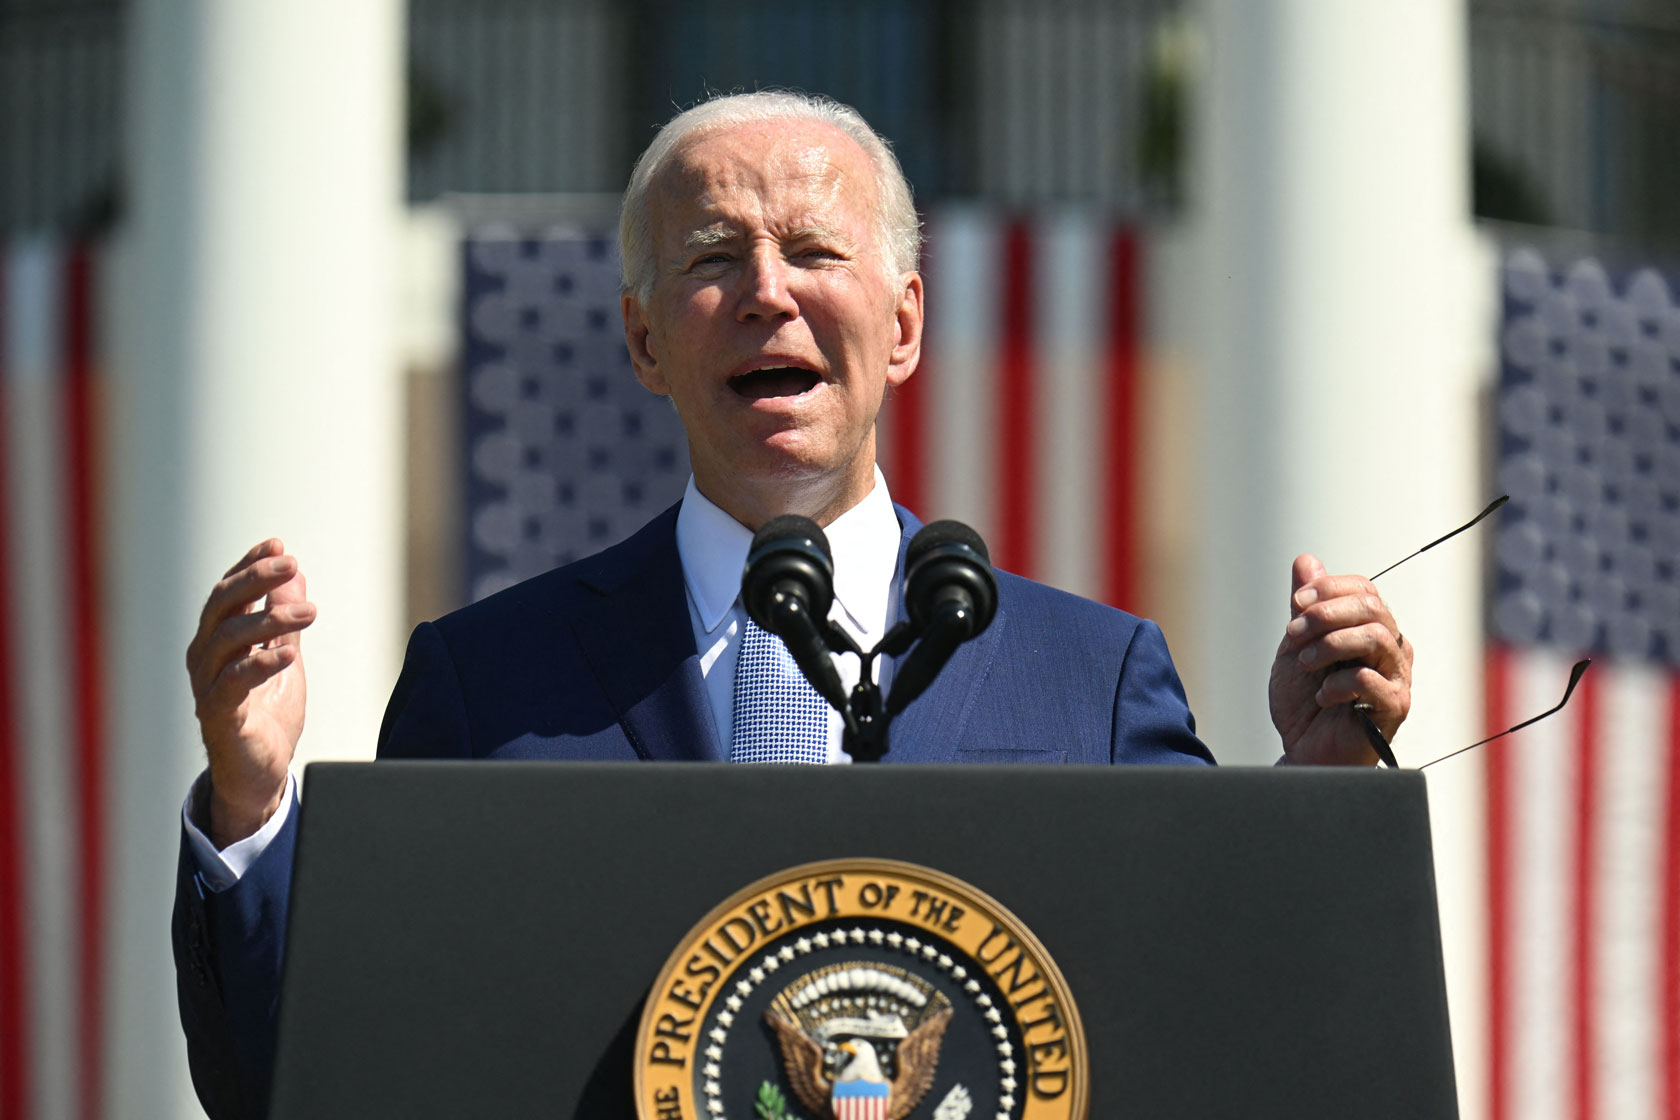 Image showing President Joe Biden speaking at the White House